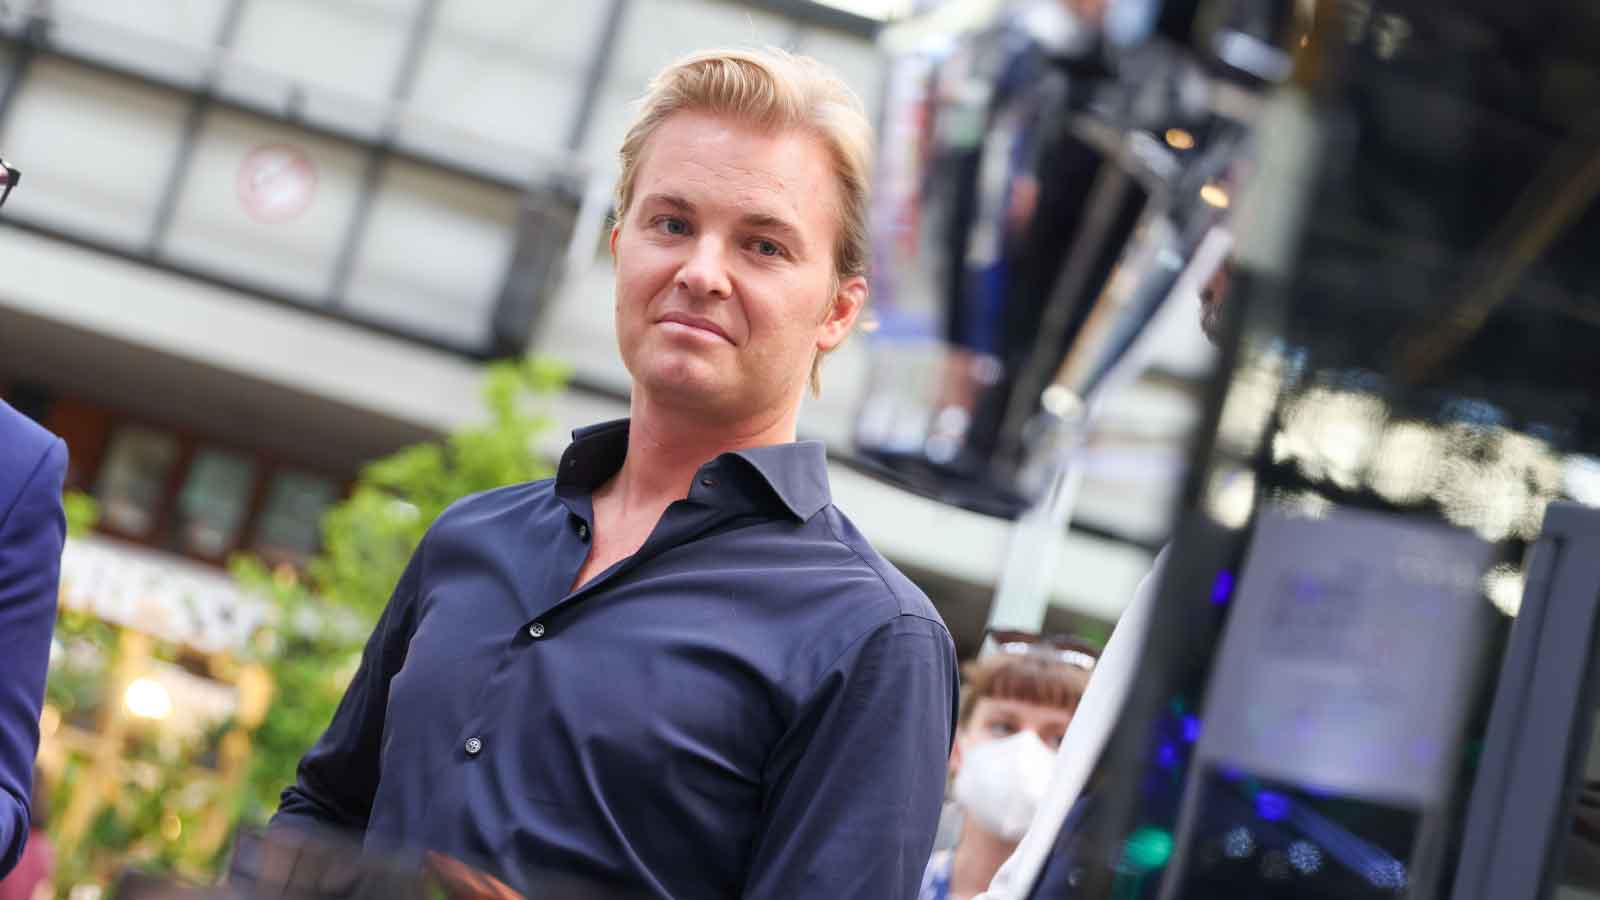 Nico Rosberg attends a green event. Berlin June 2022.